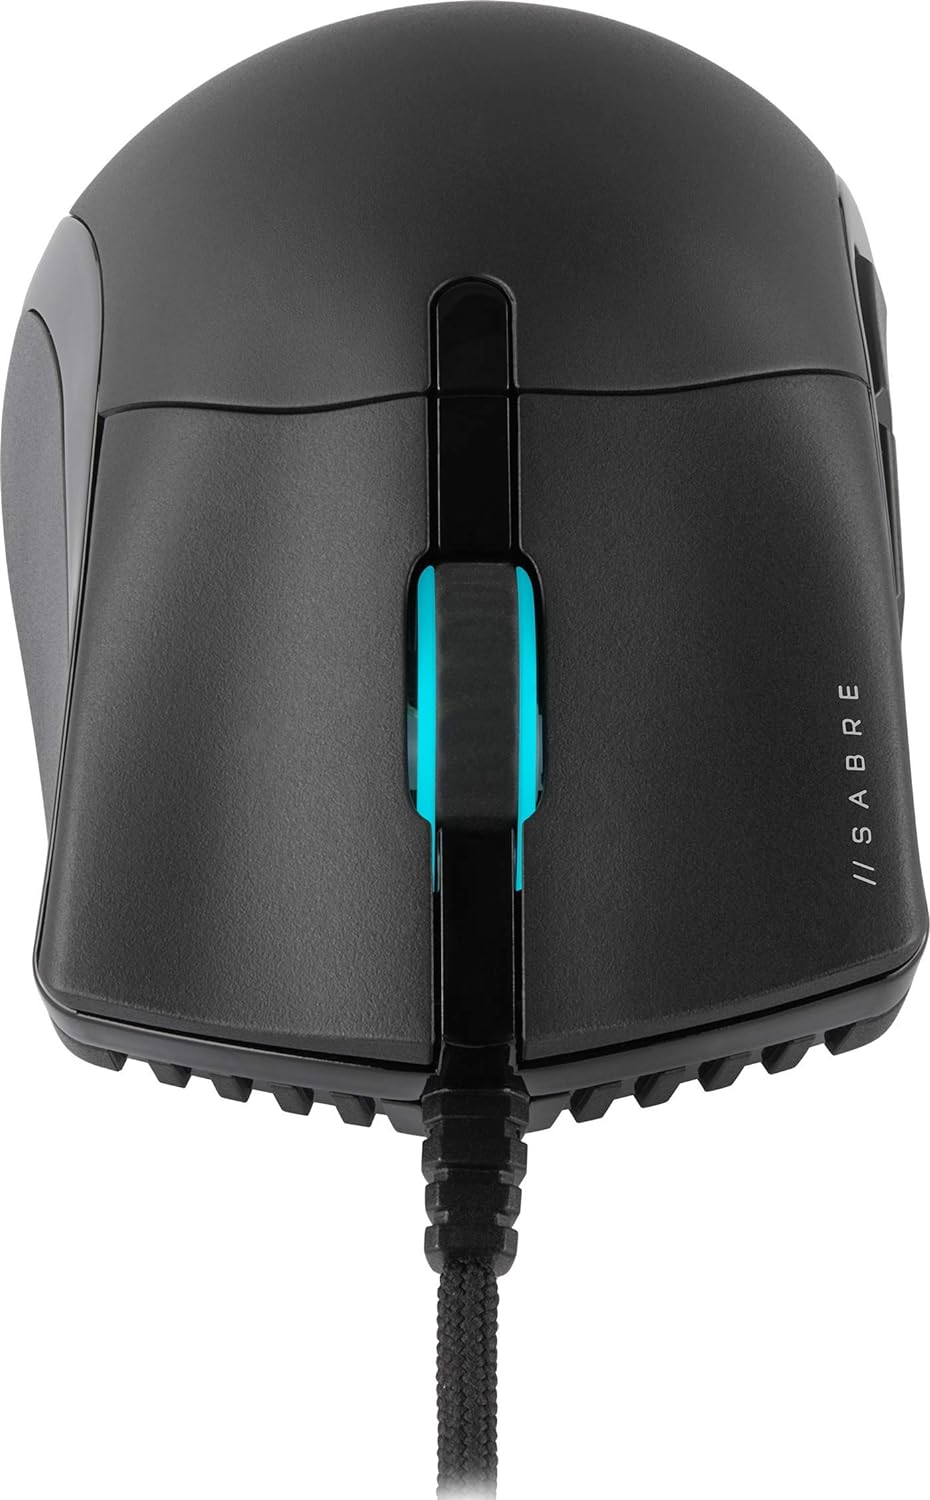 Corsair Sabre RGB Pro Champion Series Optical Gaming Mouse - Black